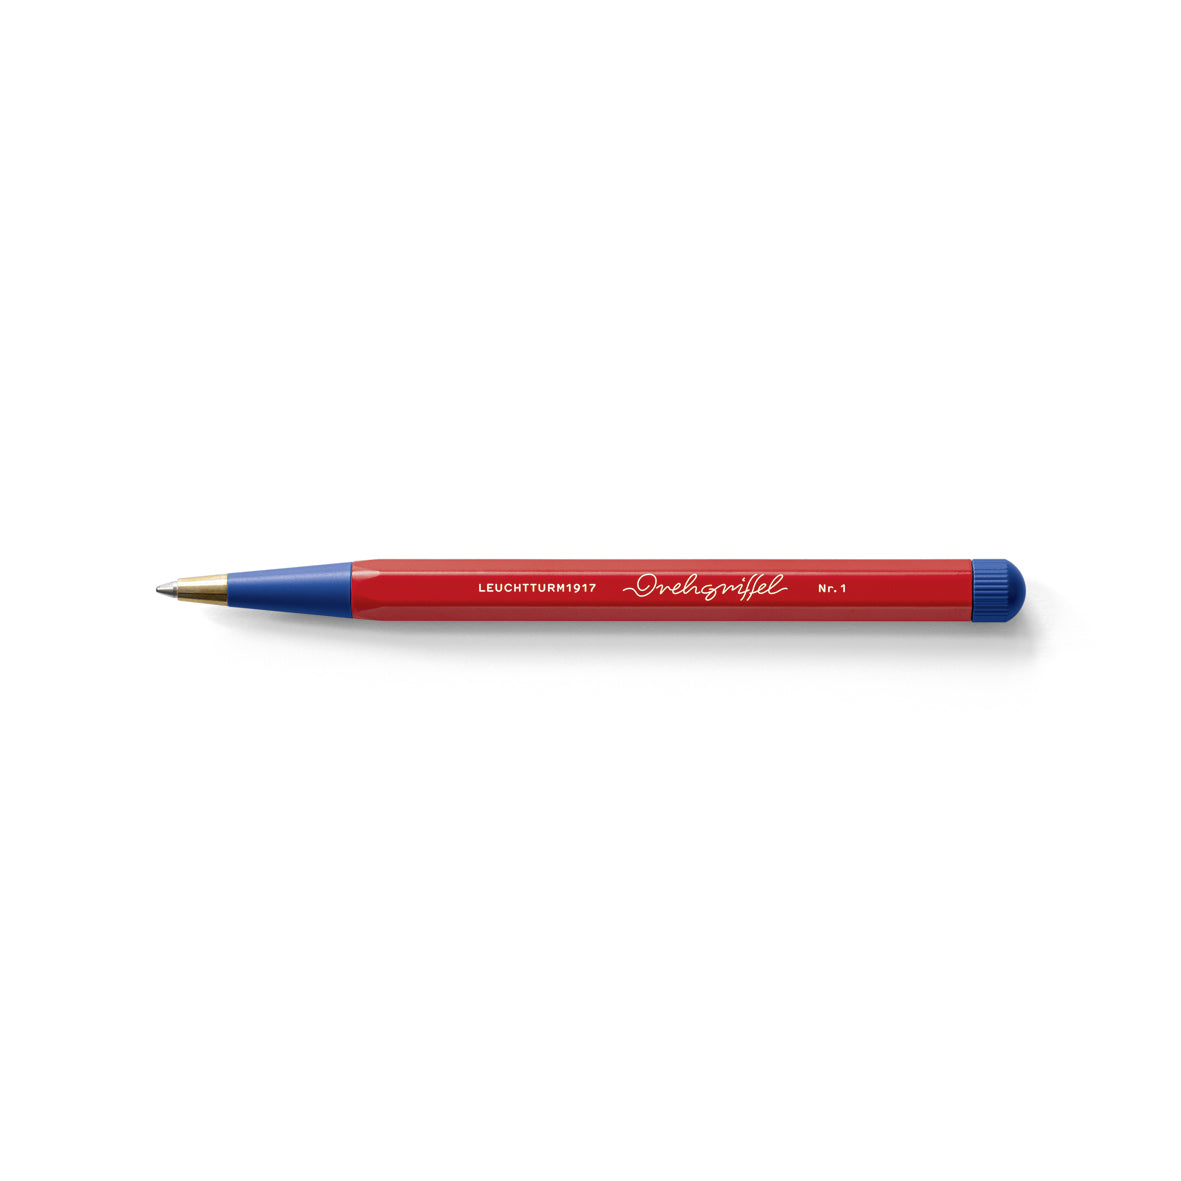 OCTÀGON DESIGN, Drehgriffel Pen , red and blue color, white typography.